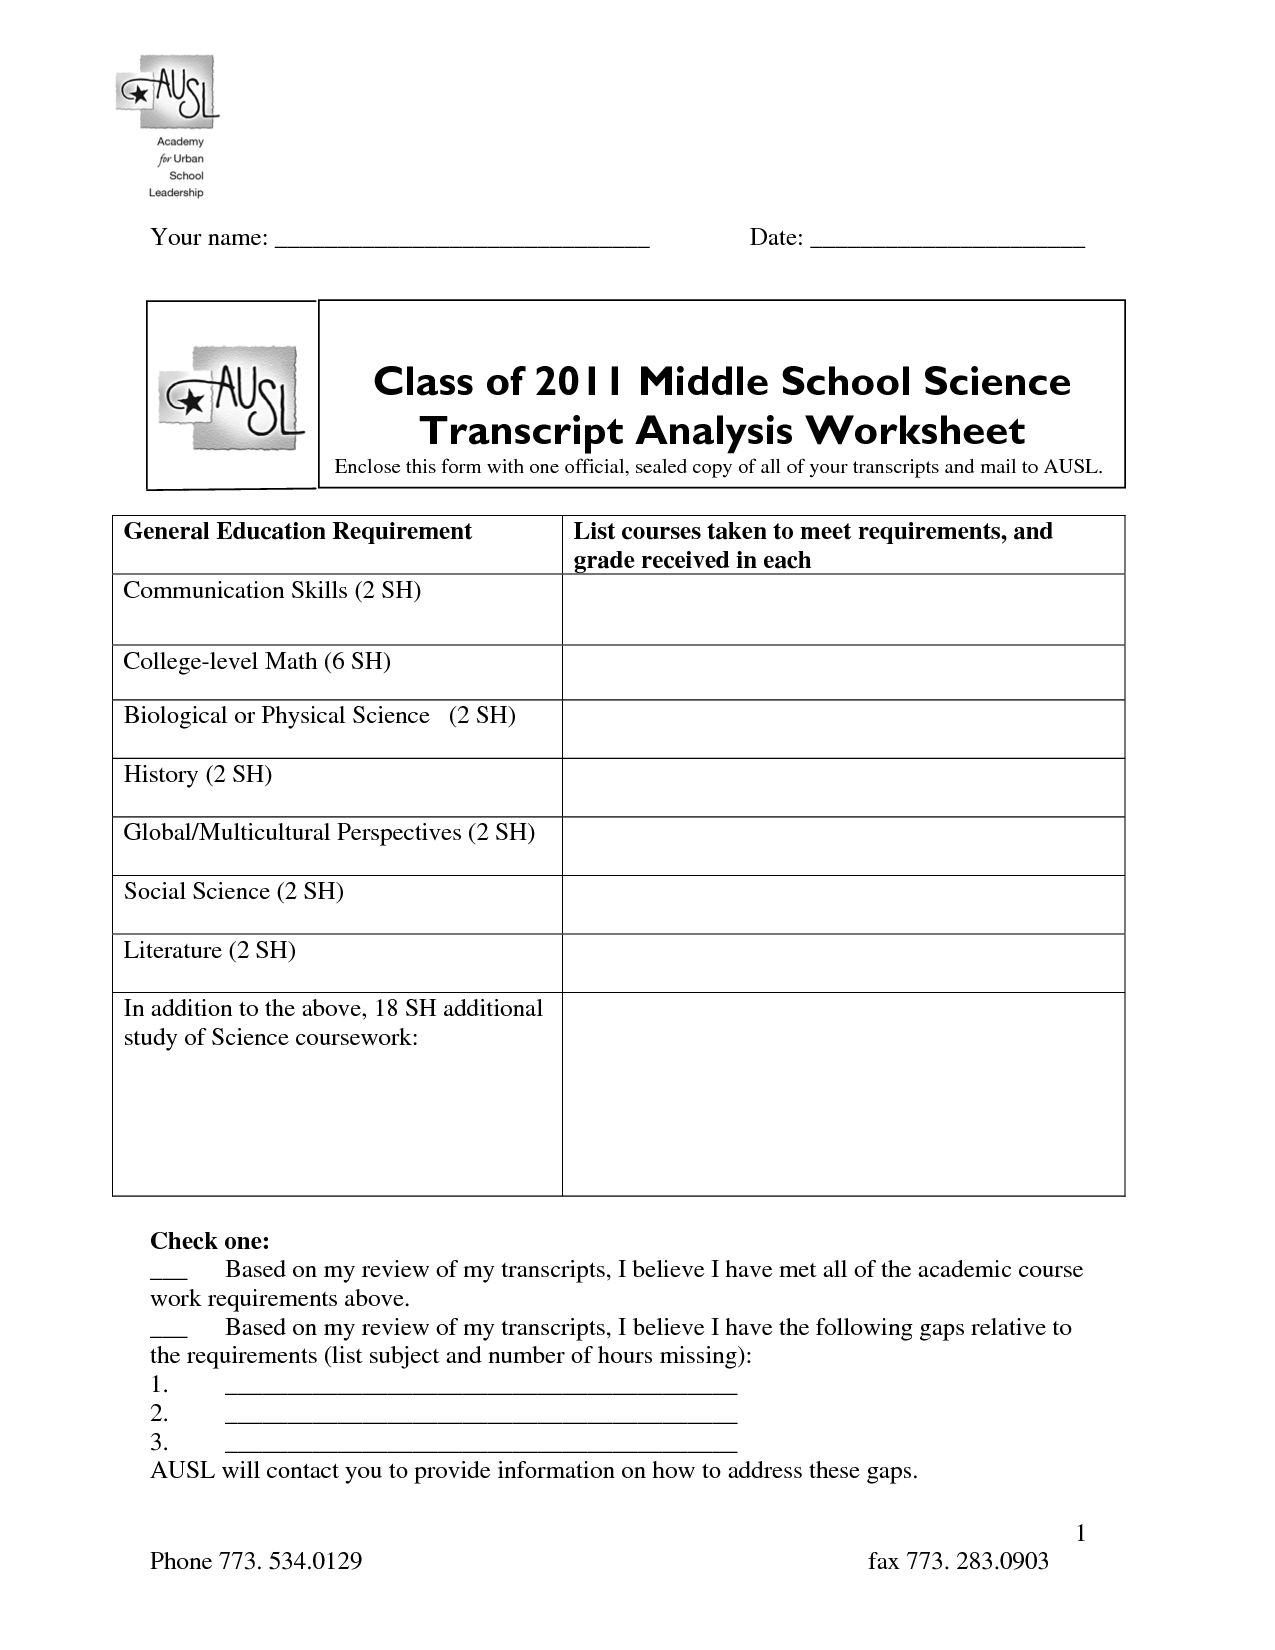 economics-worksheets-middle-school-template-library-juliajasmine